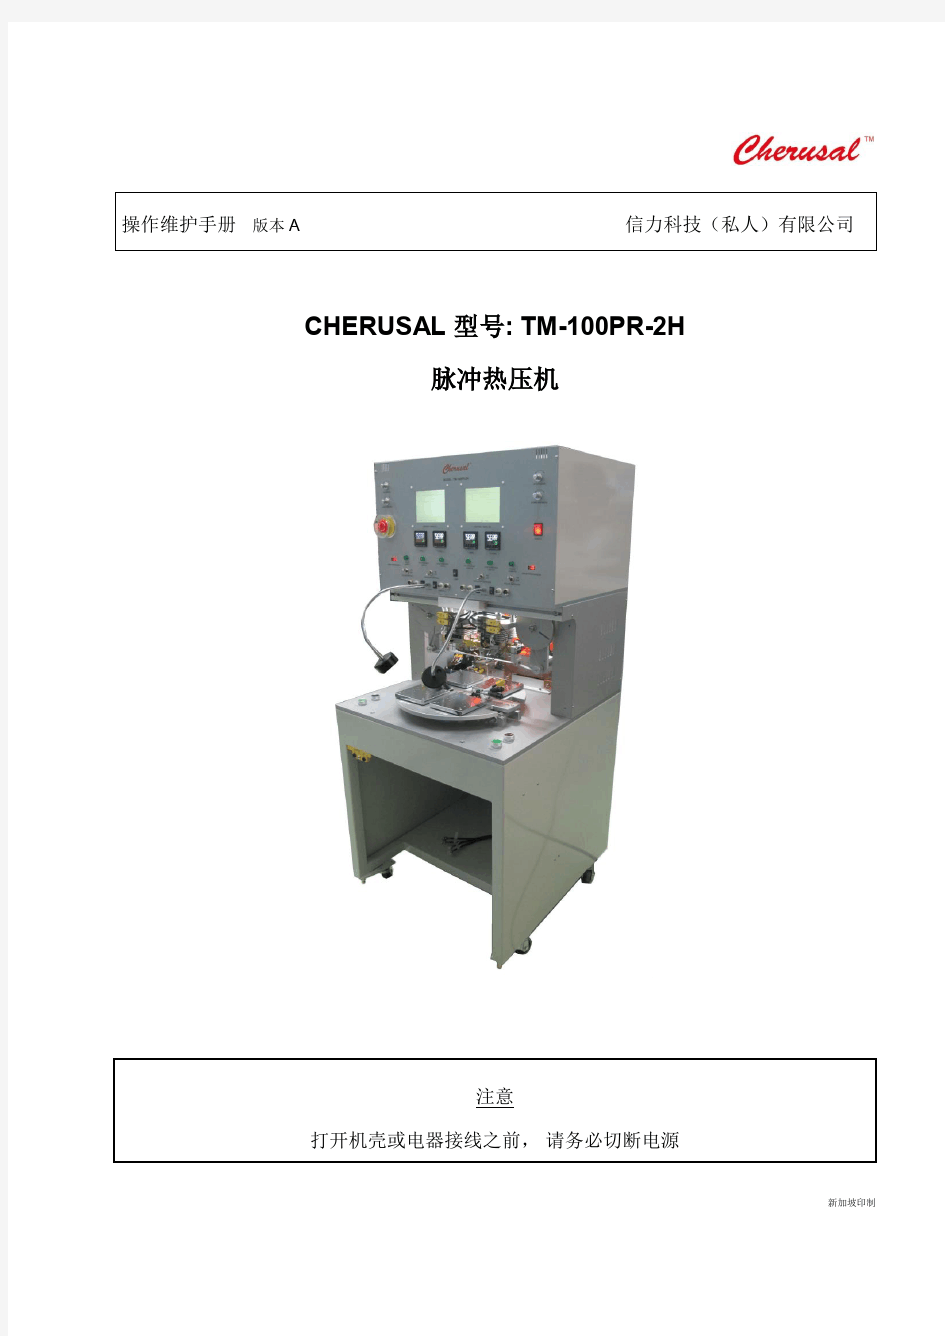 (信力热压机操作说明20150122)TM-100PR-2H Operation Manual RevA CN